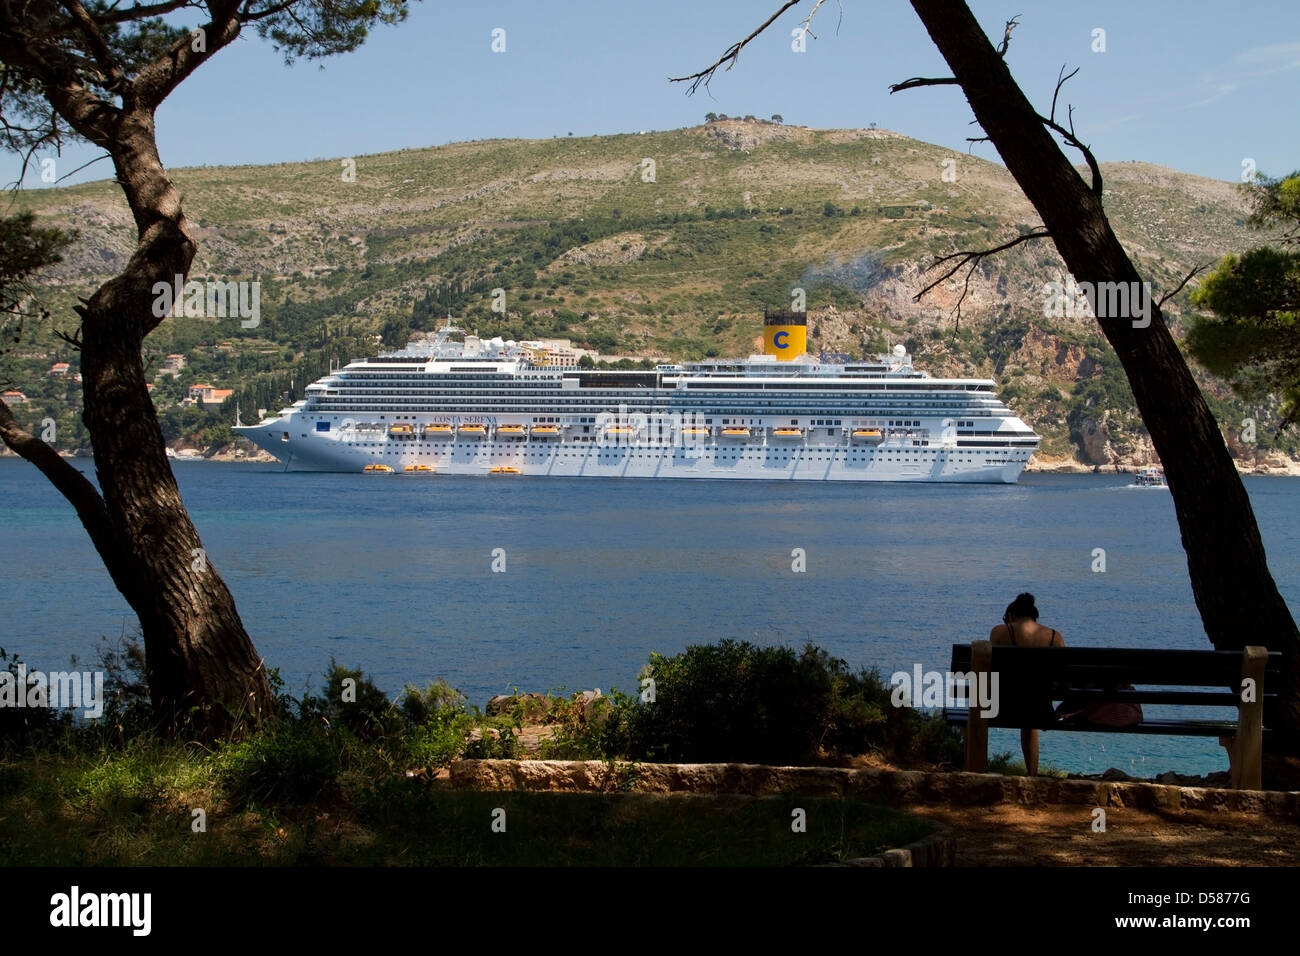 Cruise liner seen from the island of Lokrum near Dubrovnik, Croatia Stock Photo